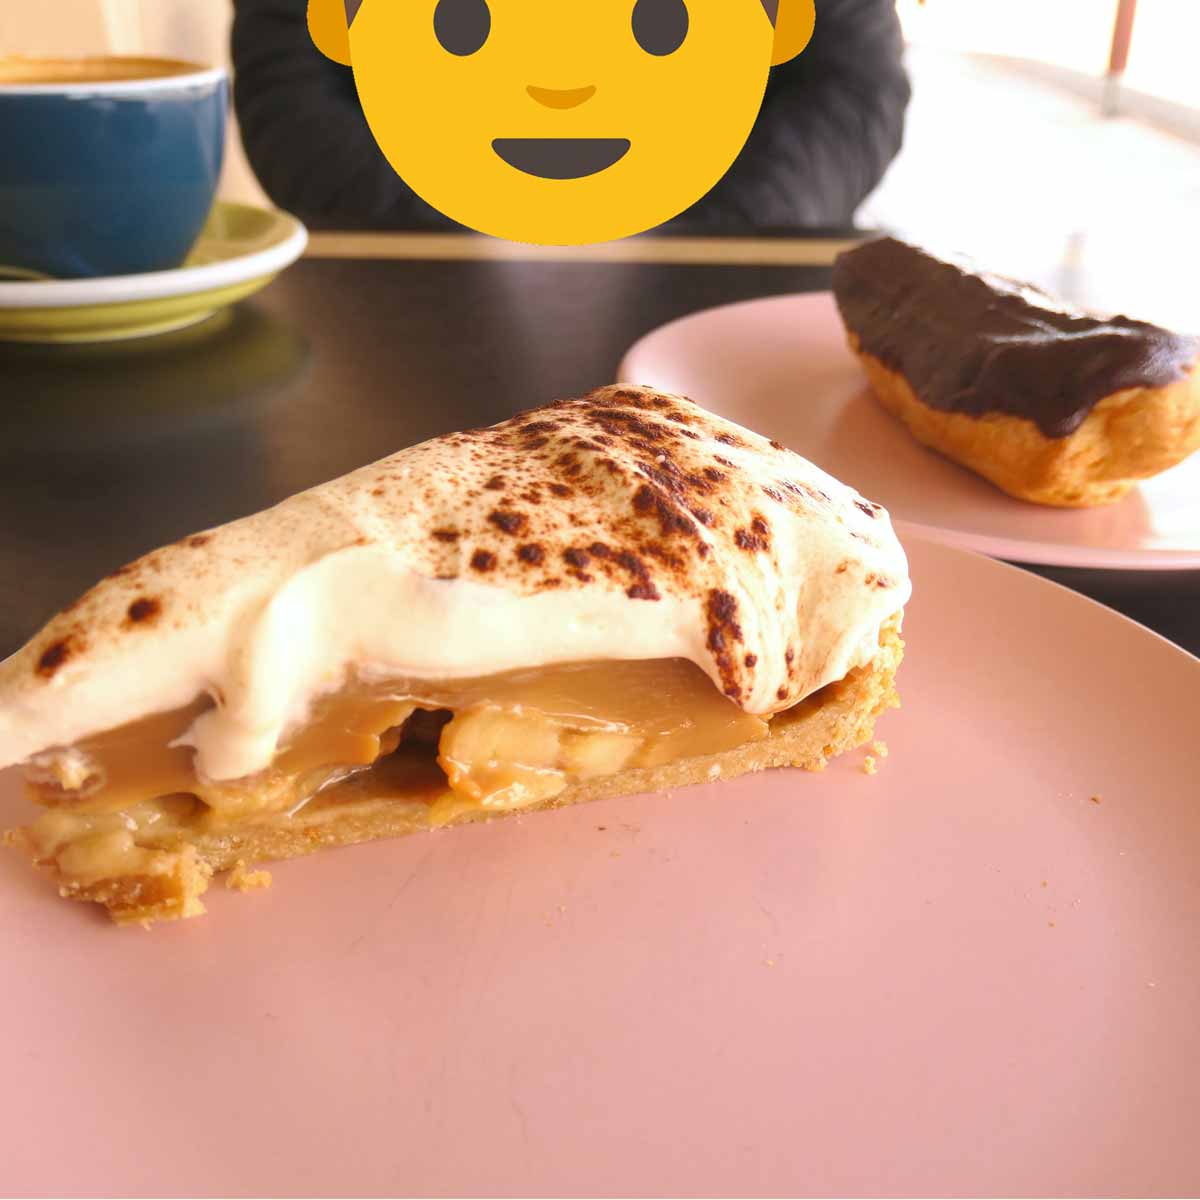 Banana Caramel Cream Pie & Chocolate Eclair at Seaspell Cafe. Located in Tumby Bay, Eyre Peninsula, South Australia.